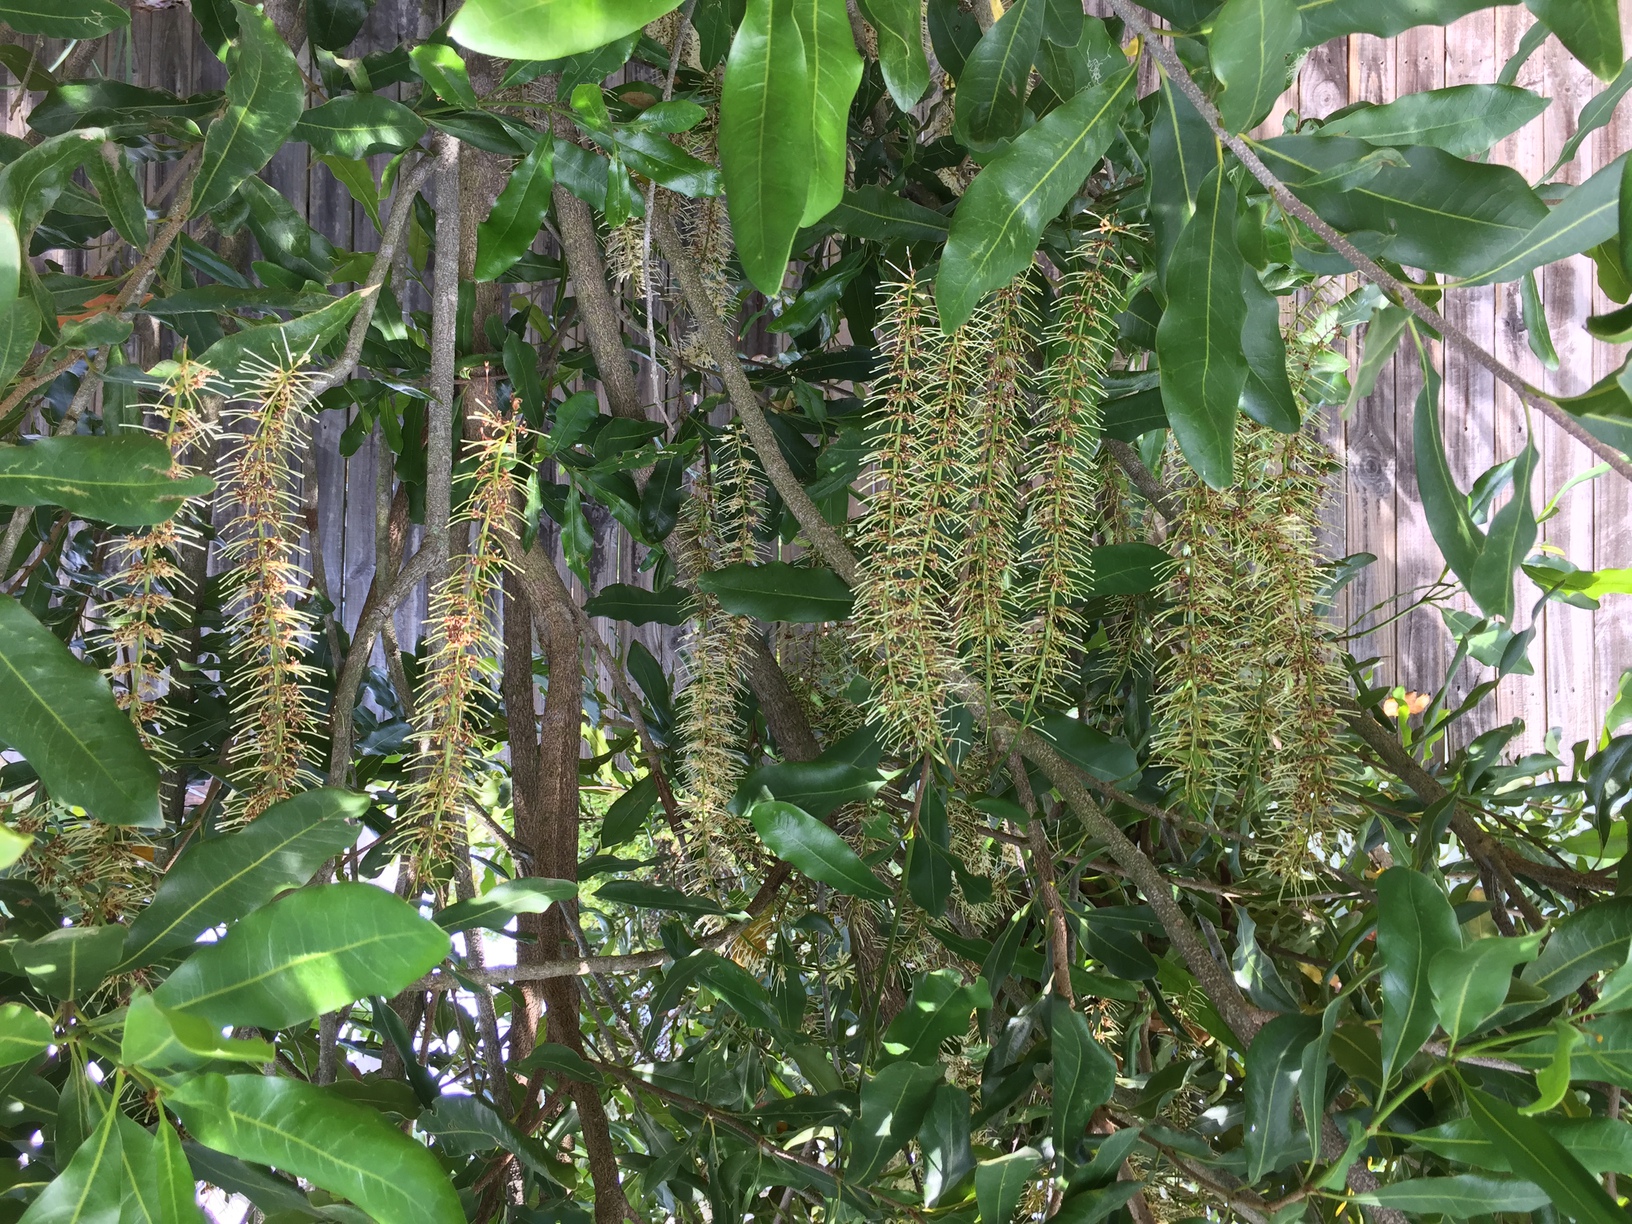 Macadamia flowers